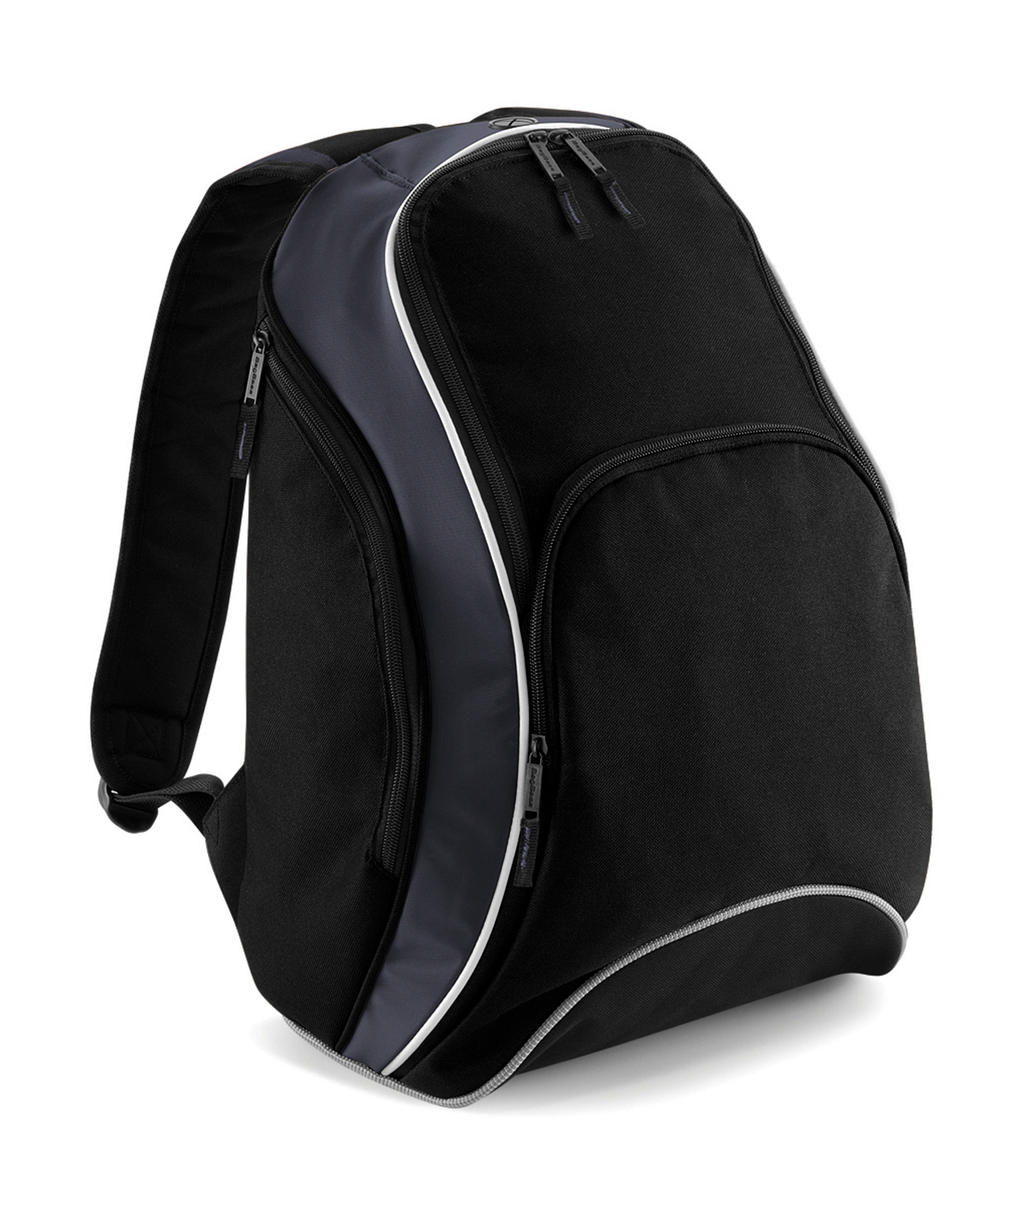  Teamwear Backpack in Farbe Black/Graphite Grey/White